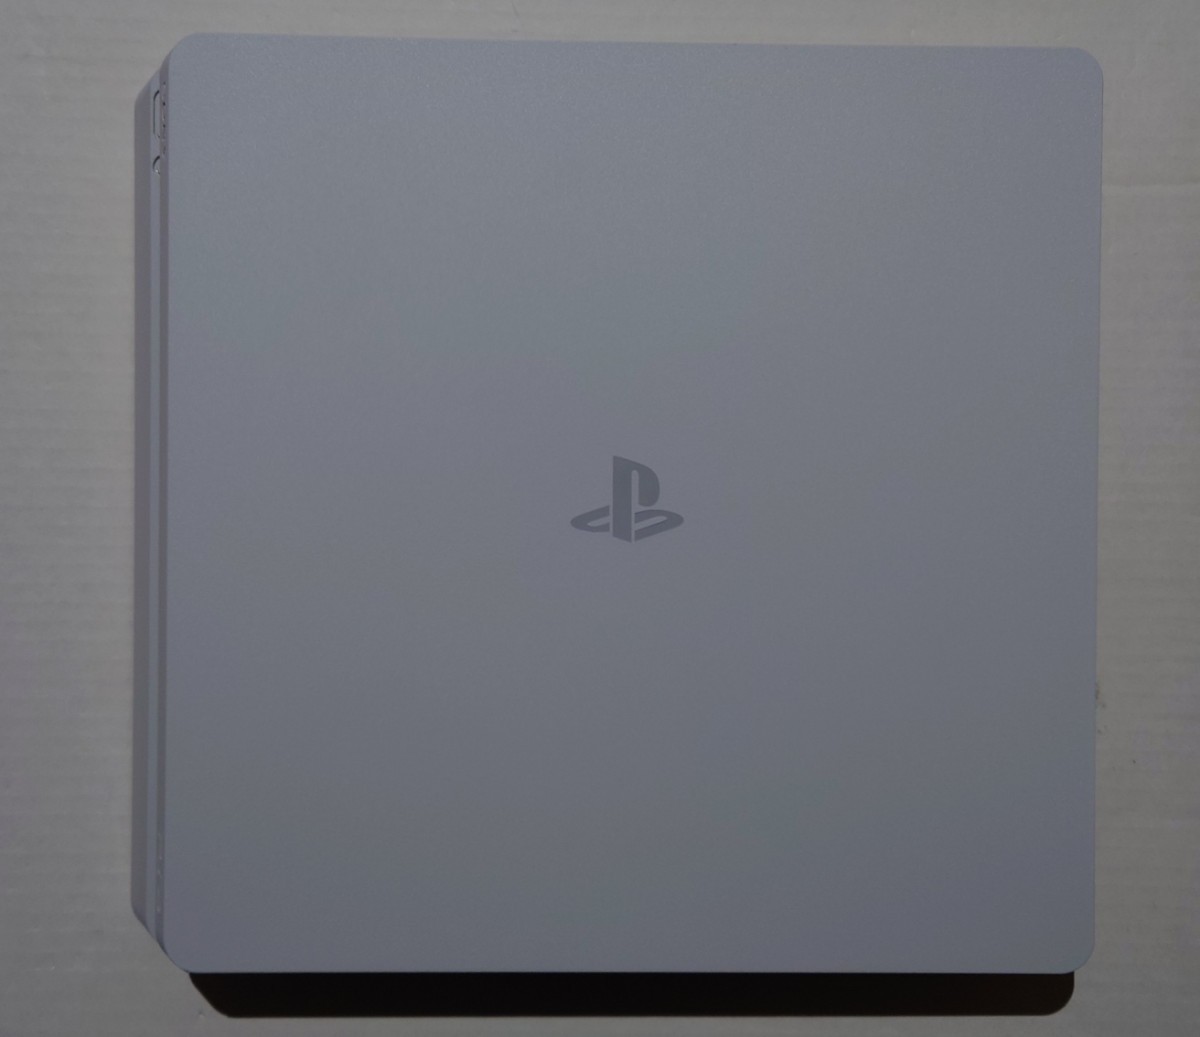 PlayStation 4 グレイシャー・ホワイト 500GB CUH-2100A 分解歴なし 封印シールあり 本体のみ 動作確認済み 本体キズなし美品に近い状態